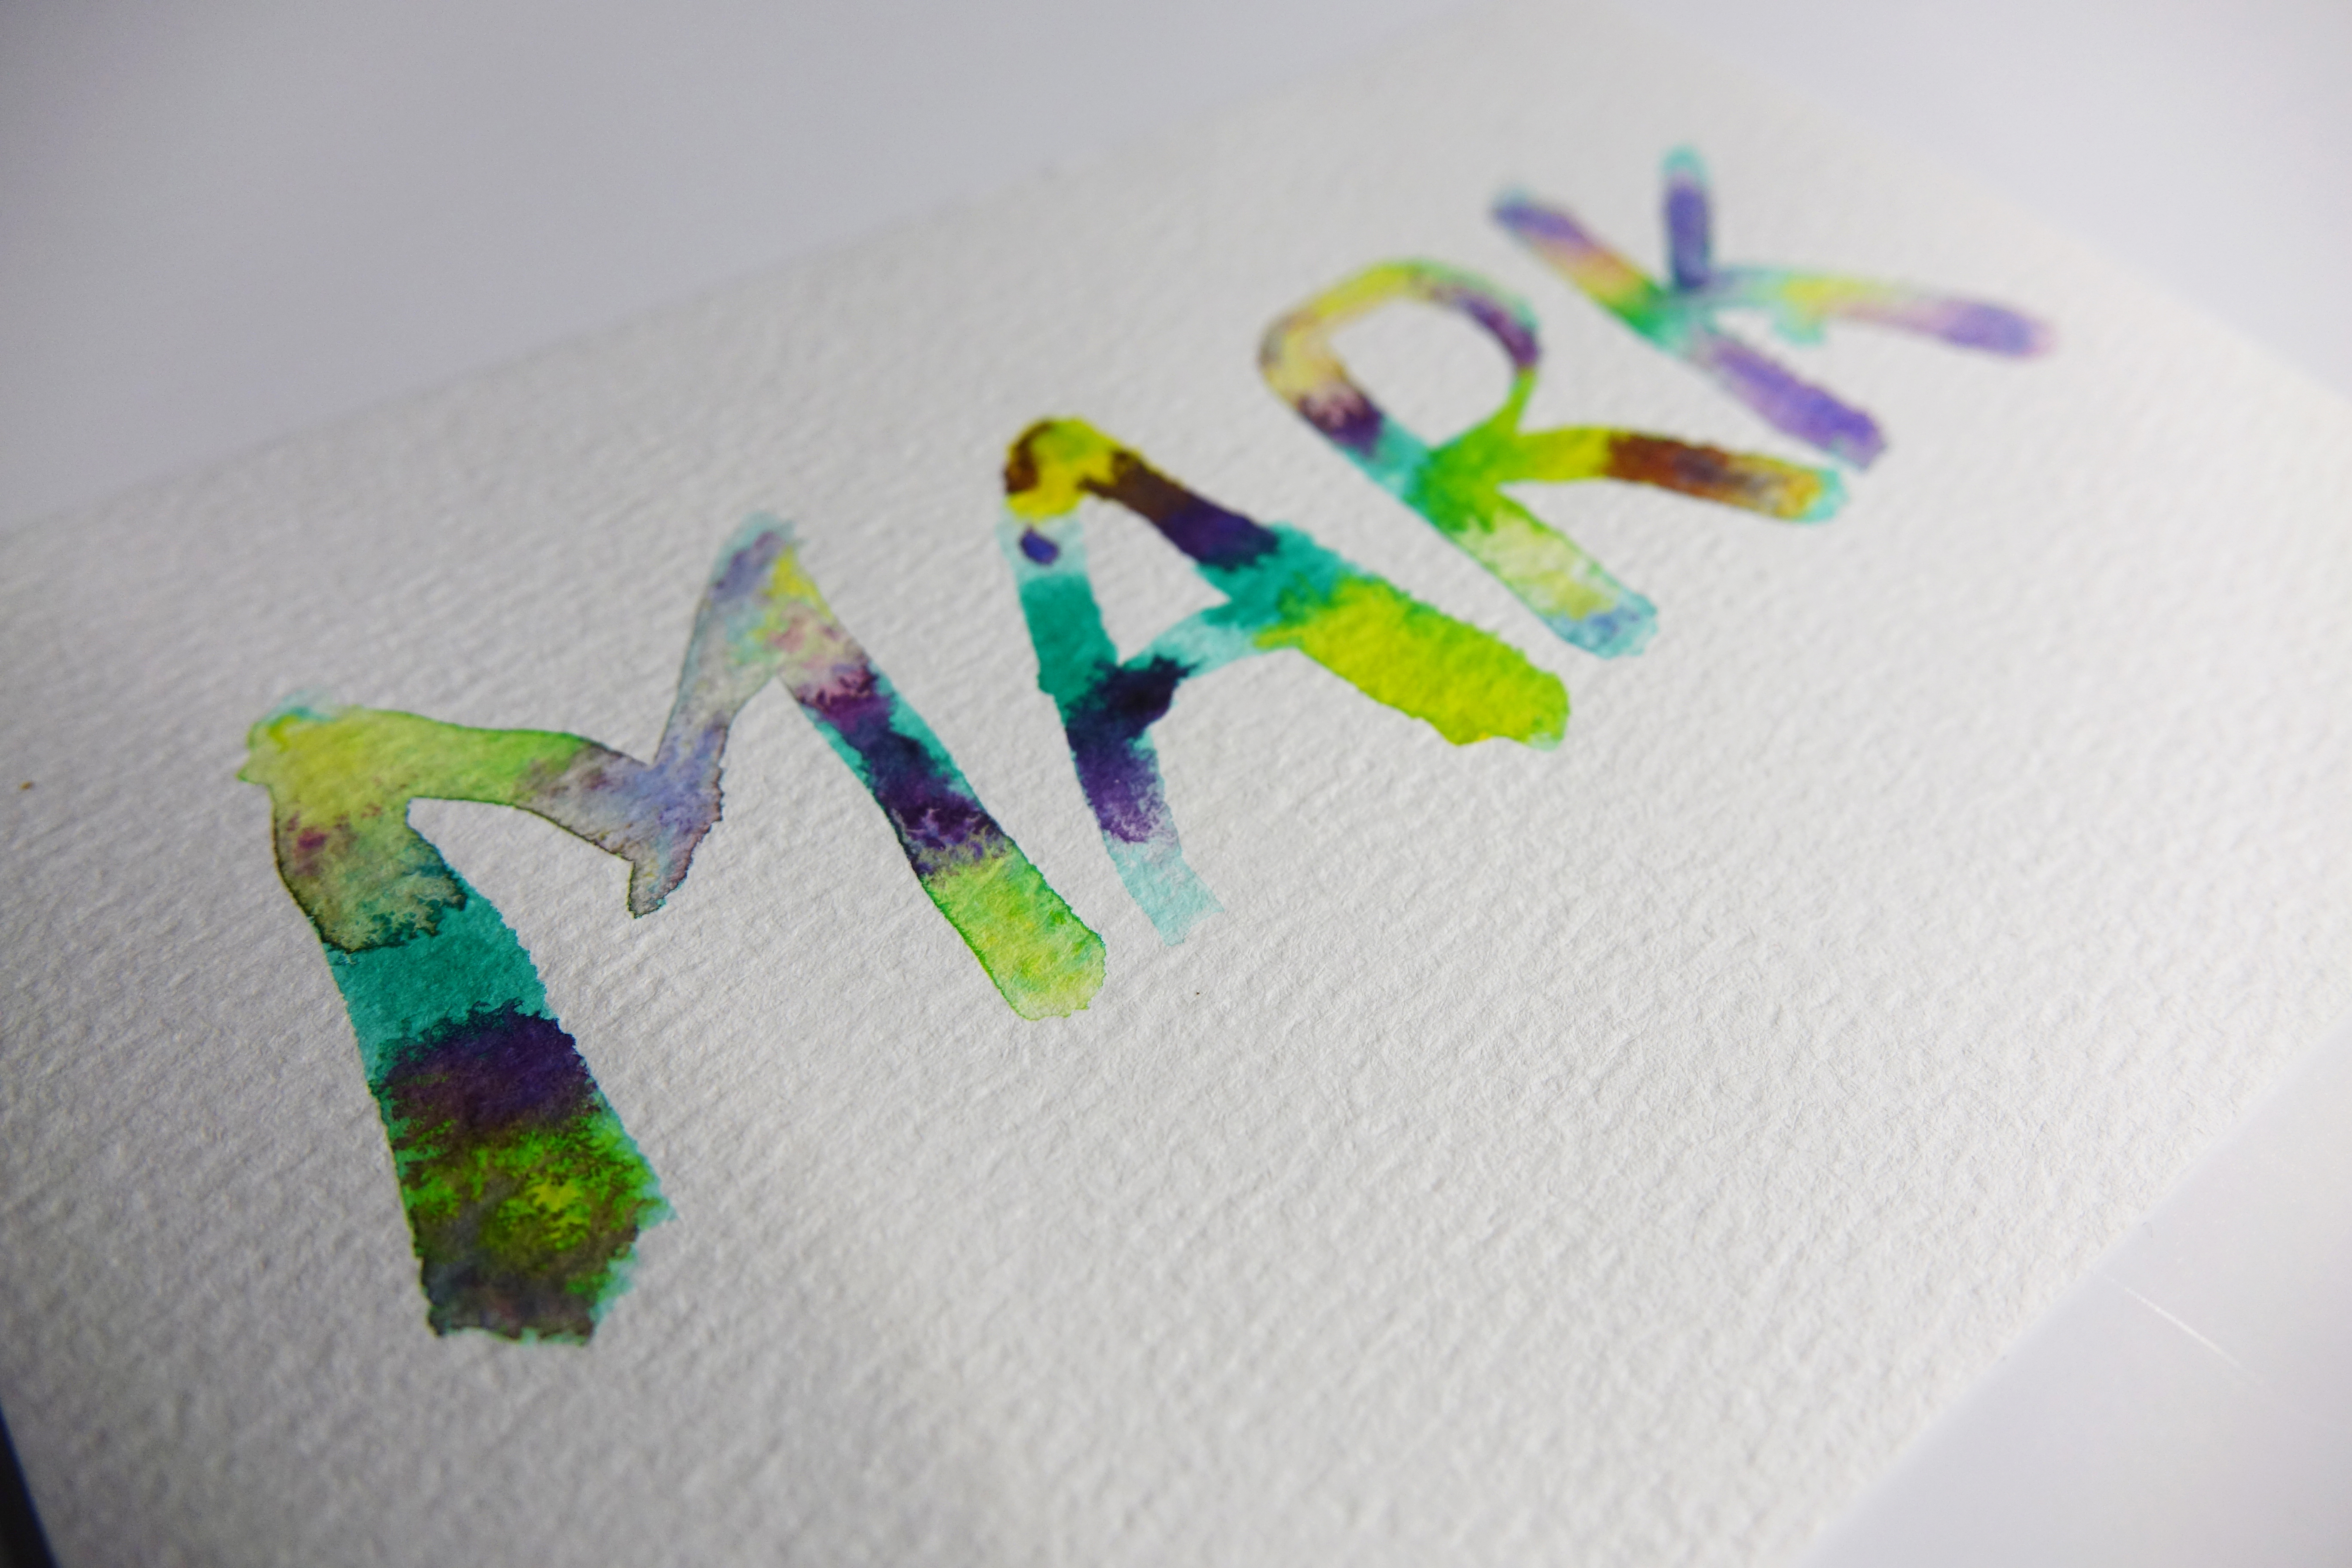 73. Mark Wallinger - Watermark II - DETAIL